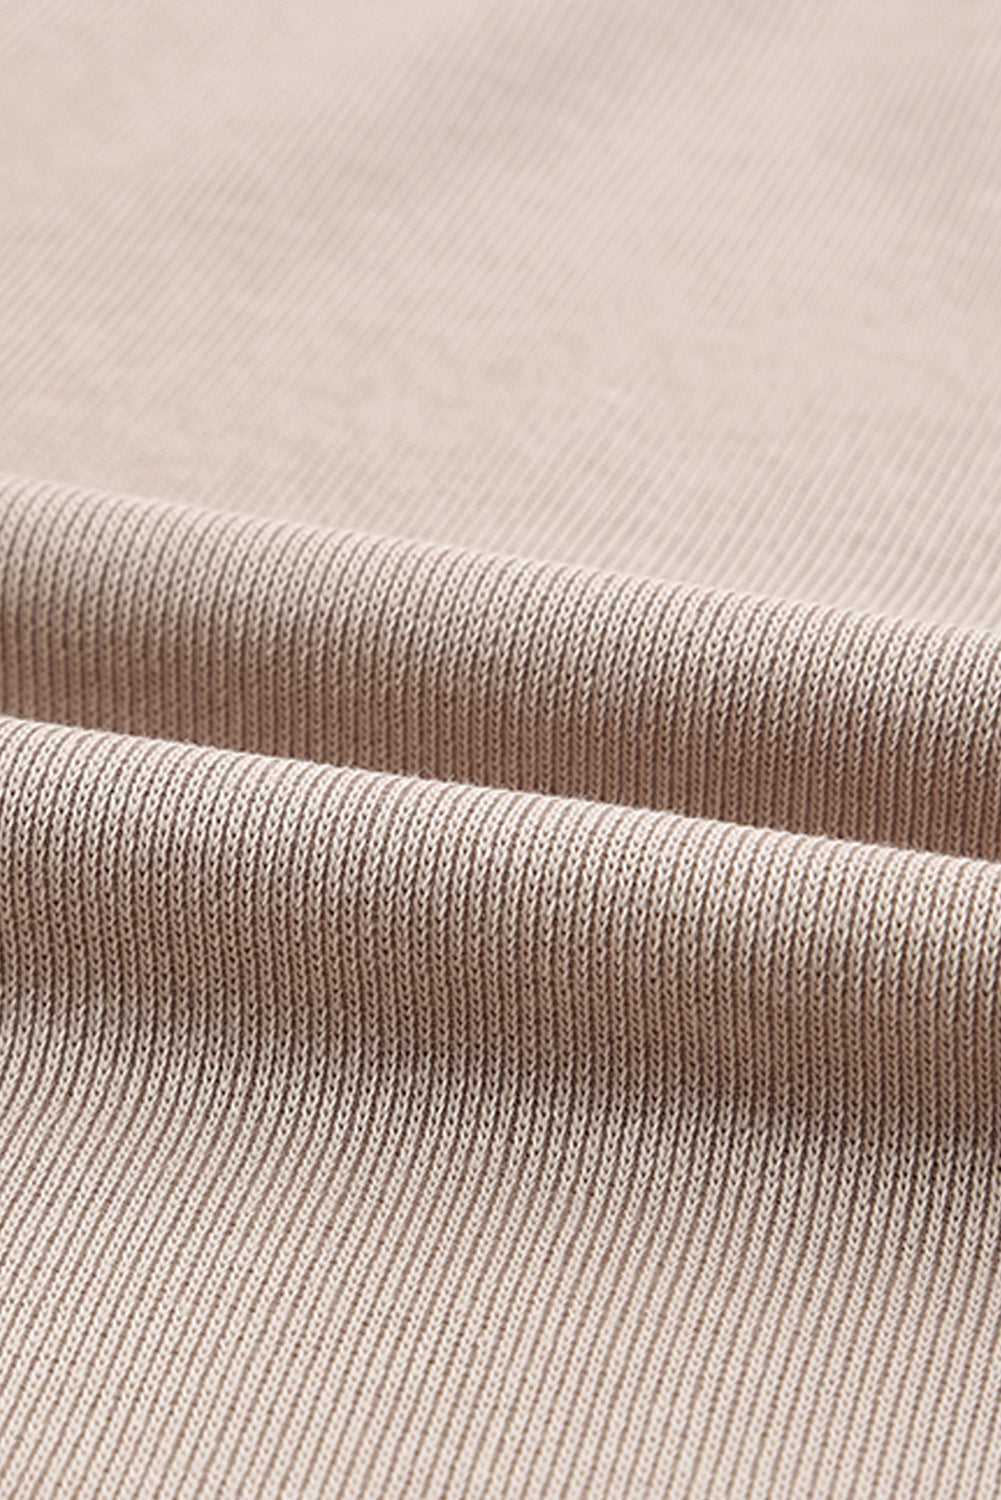 Khakifarbene Oversize-Bluse aus leichtem Strick